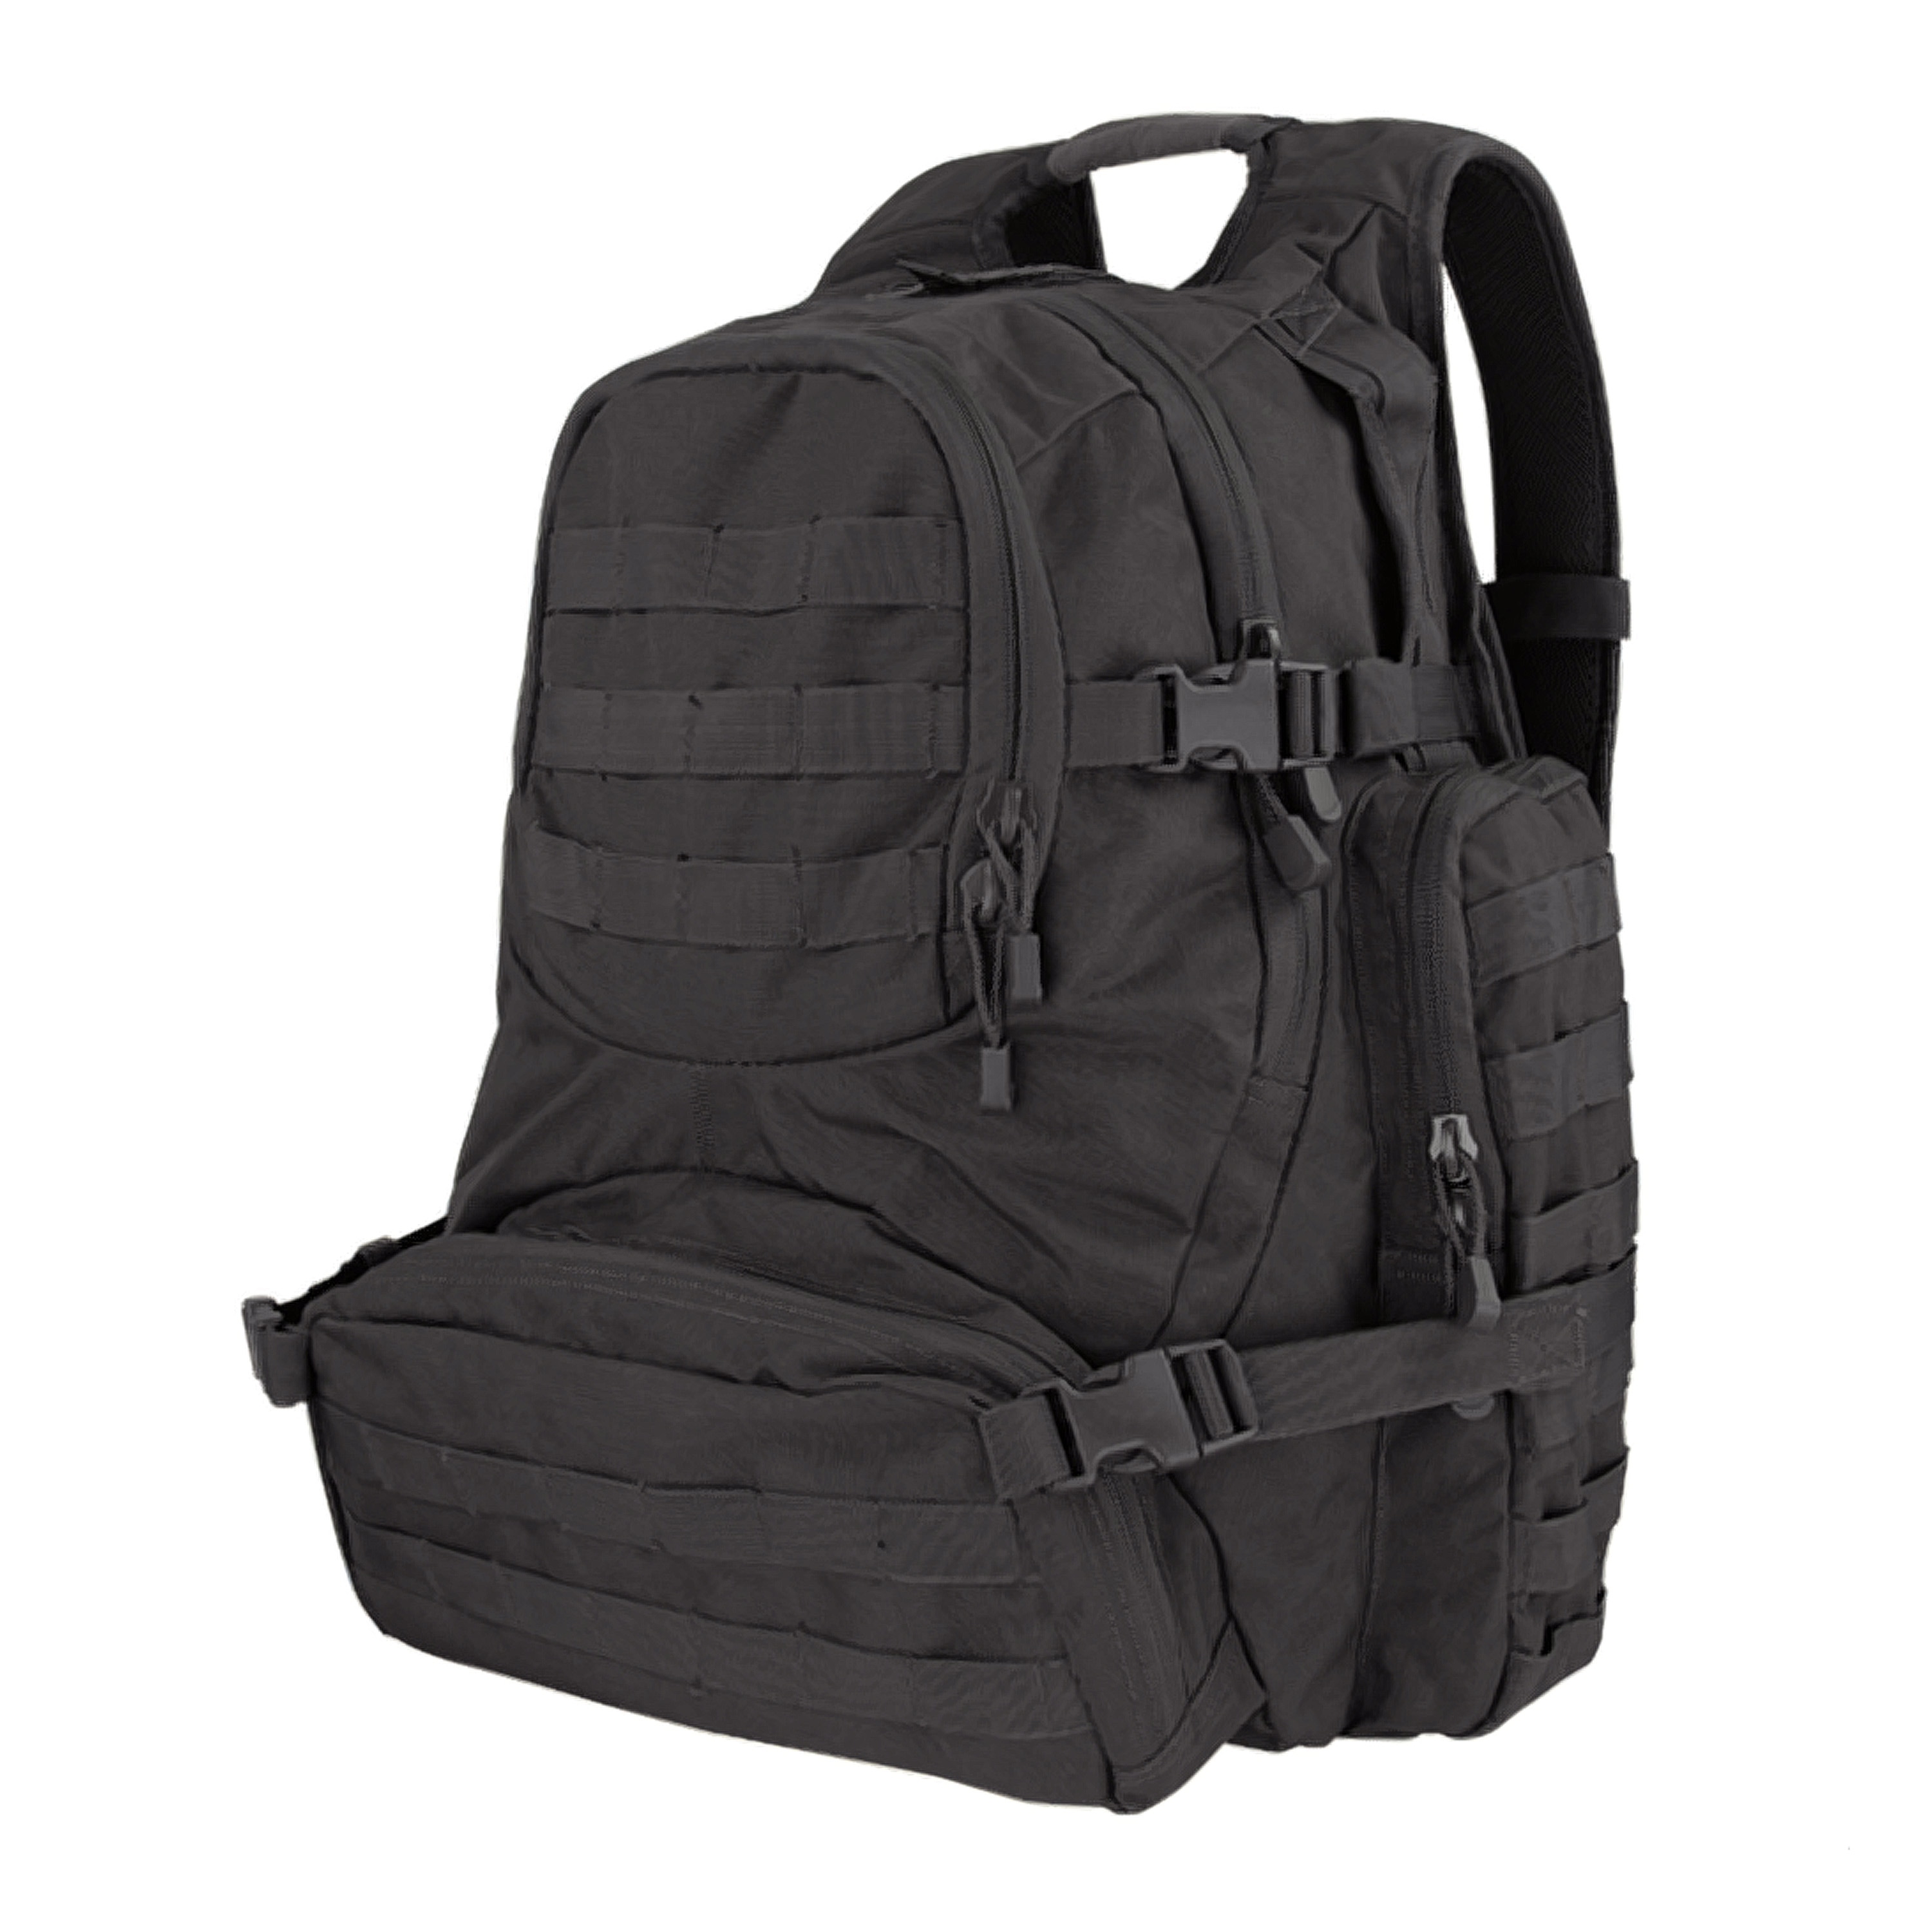 Condor Urban Go Pack black | Condor Urban Go Pack black | Backpacks ...